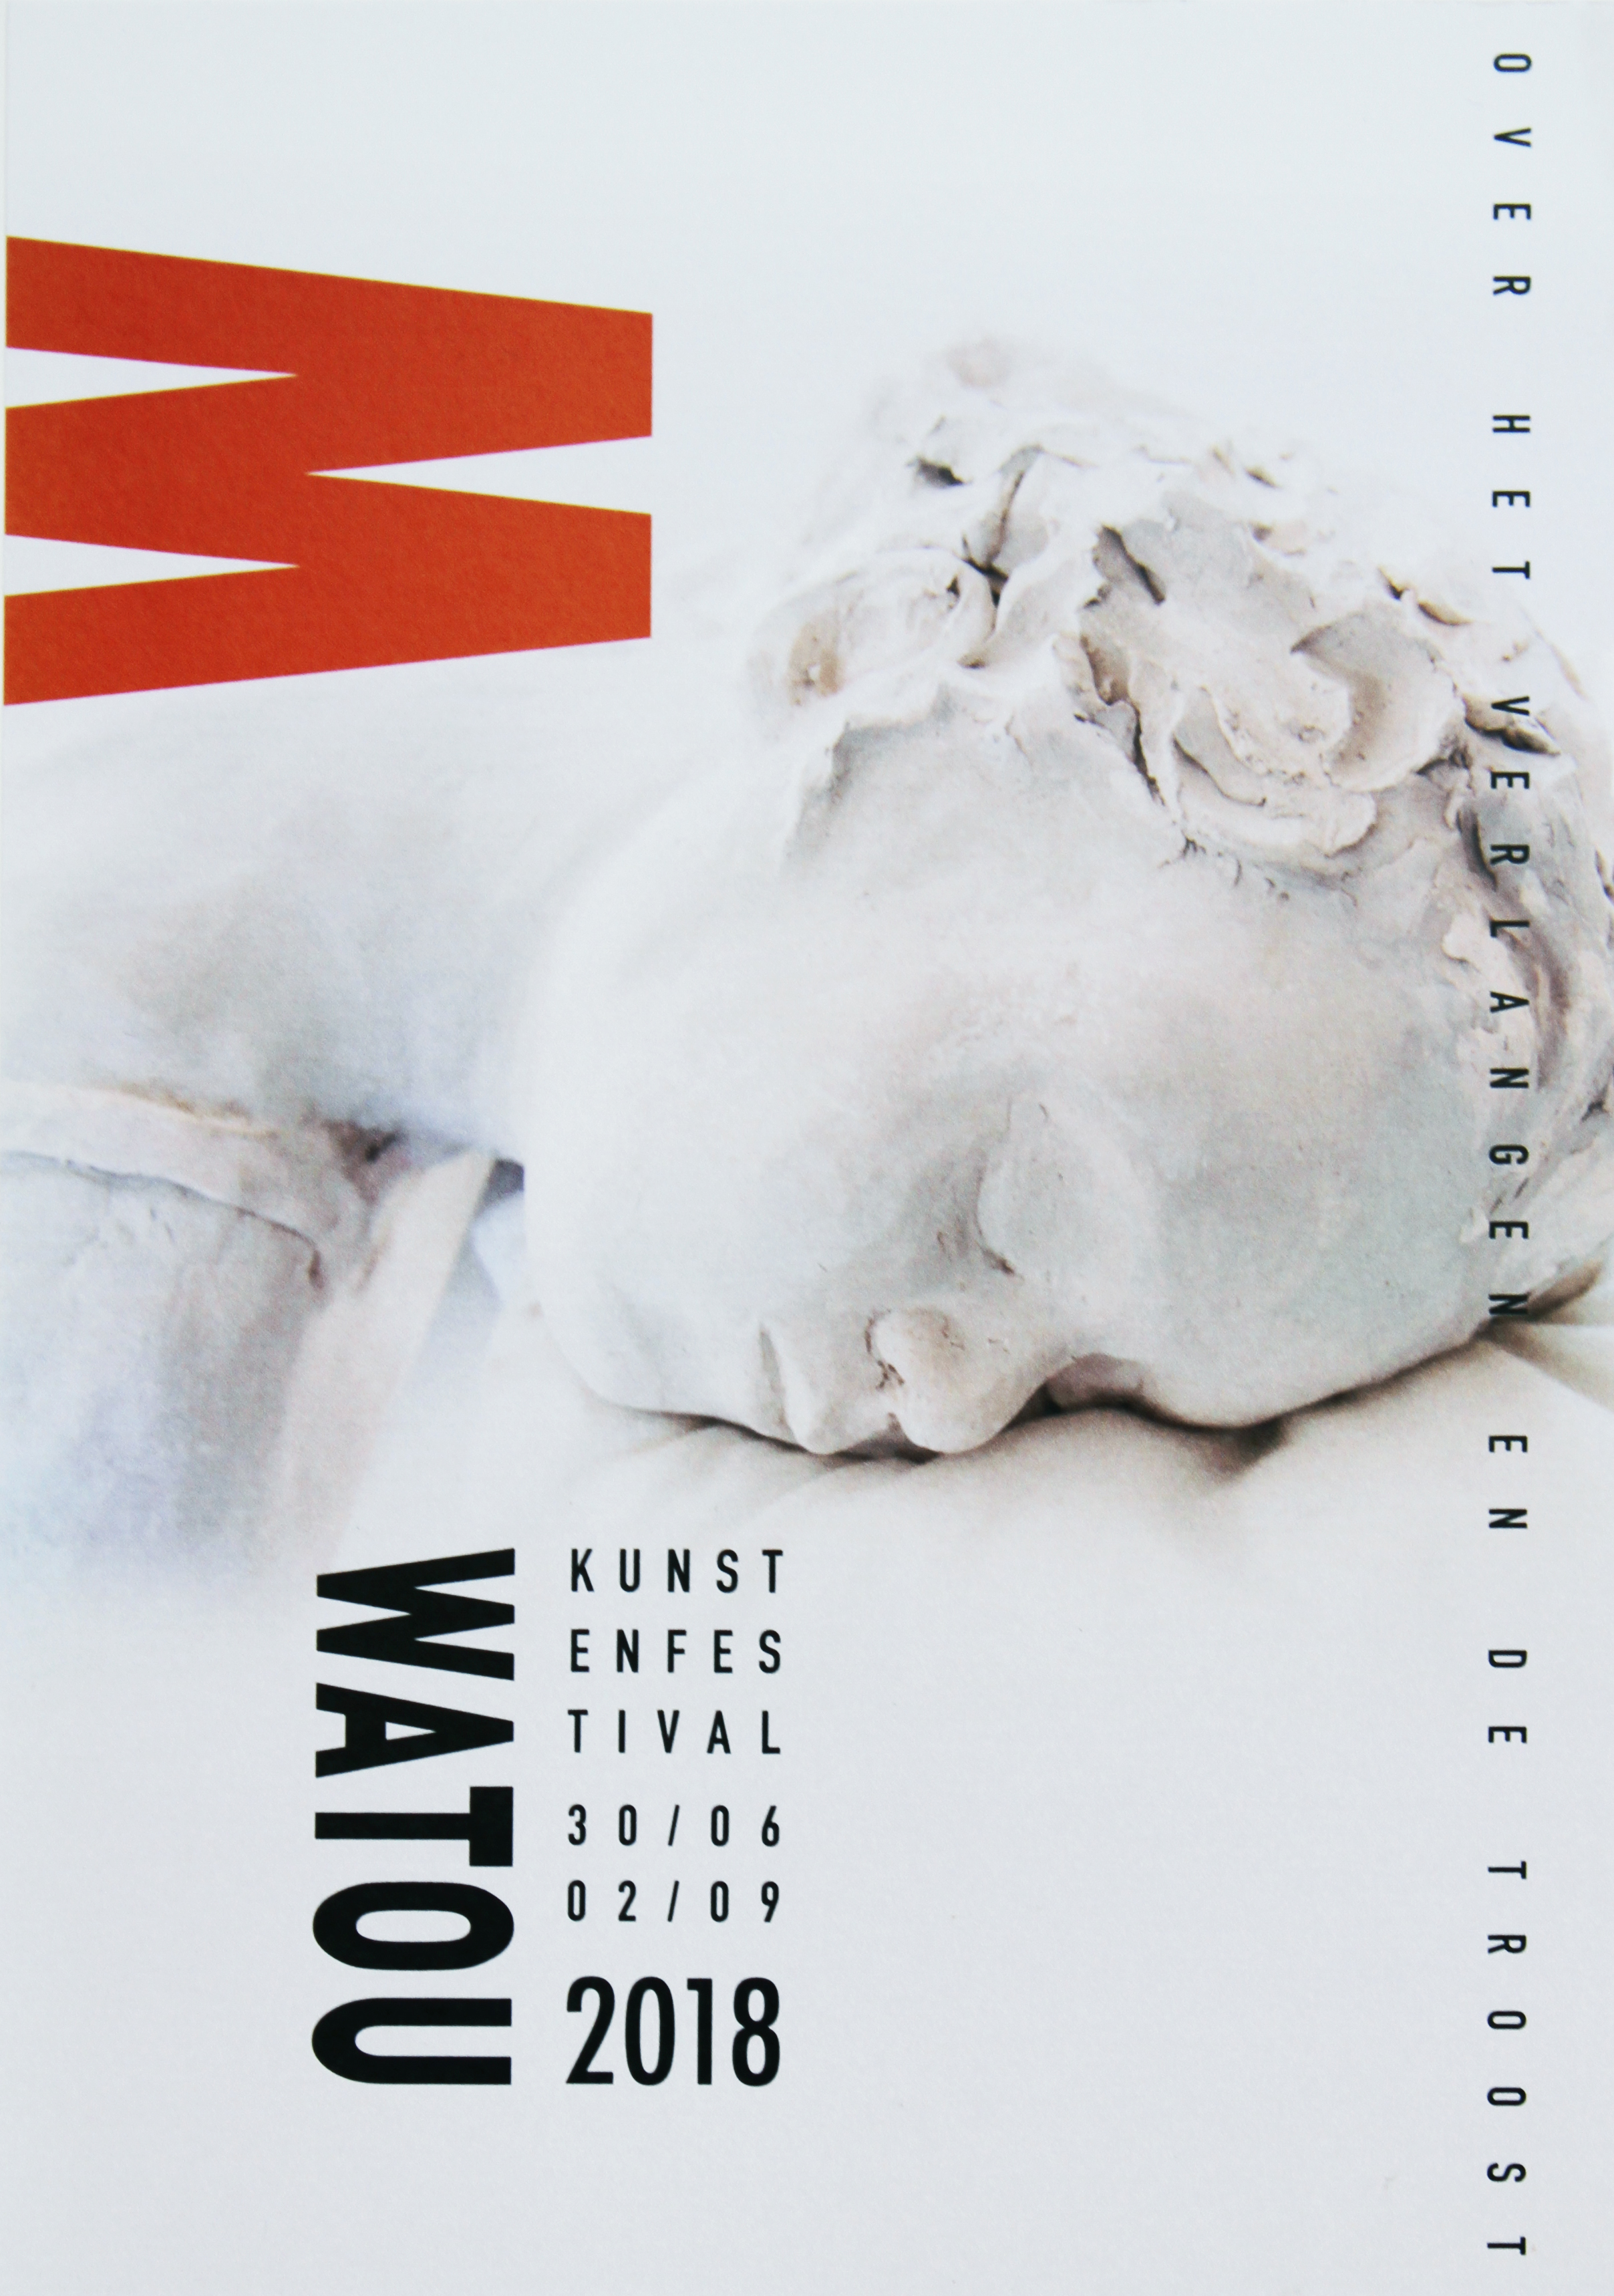 Watou 2018 affiche ontwerp